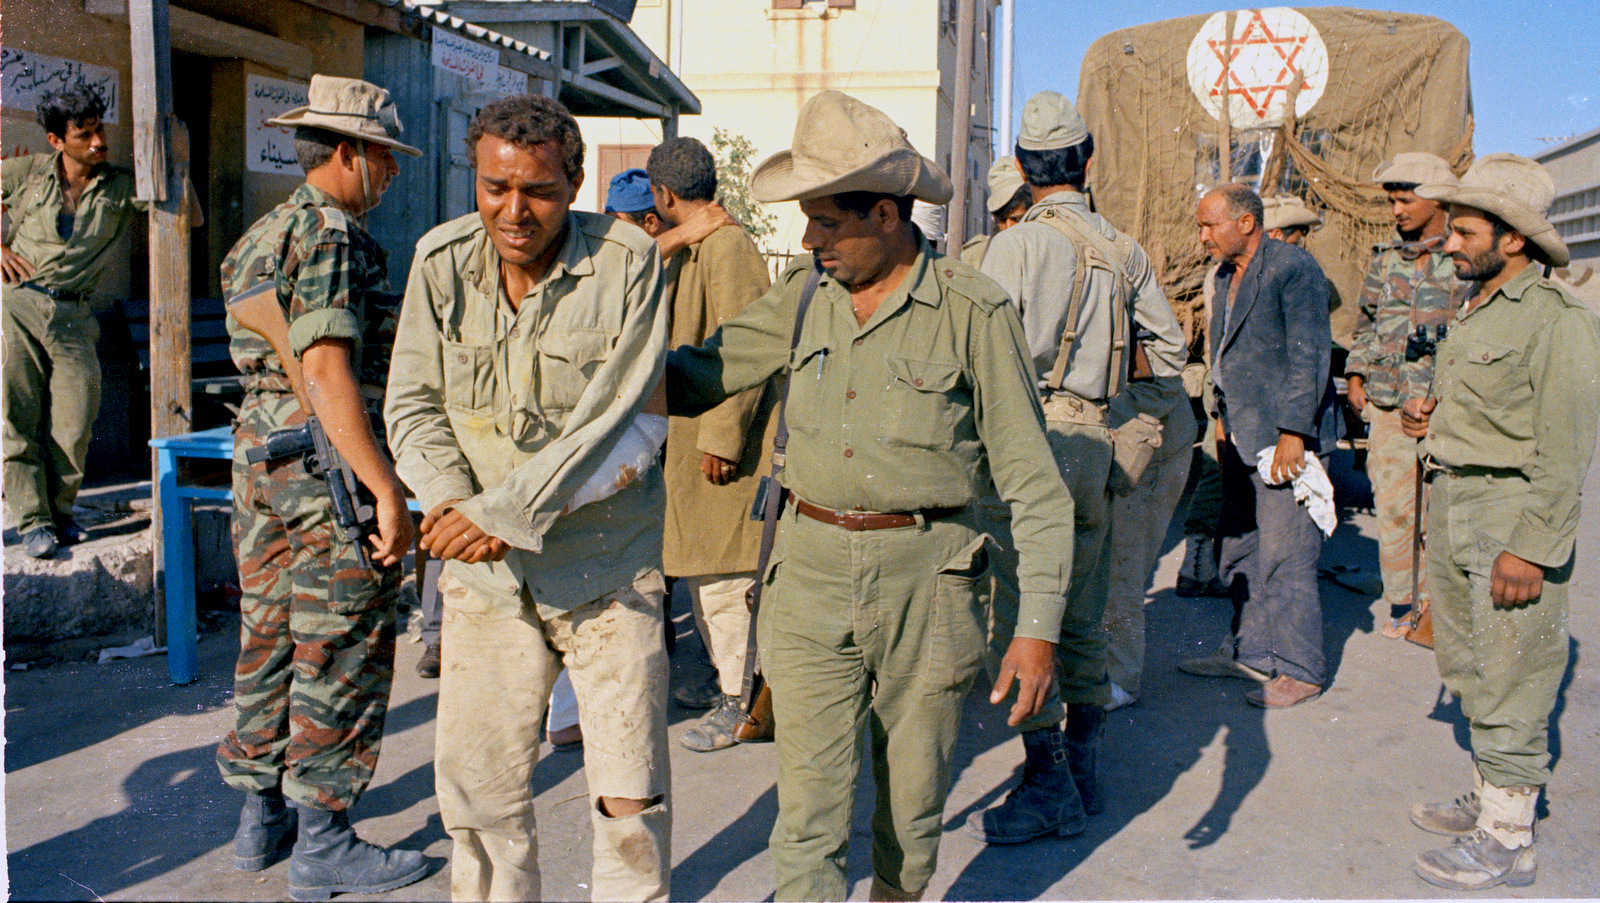 An Israeli soldier is seen with an Arab prisoner, June 1967. (AP Photo)